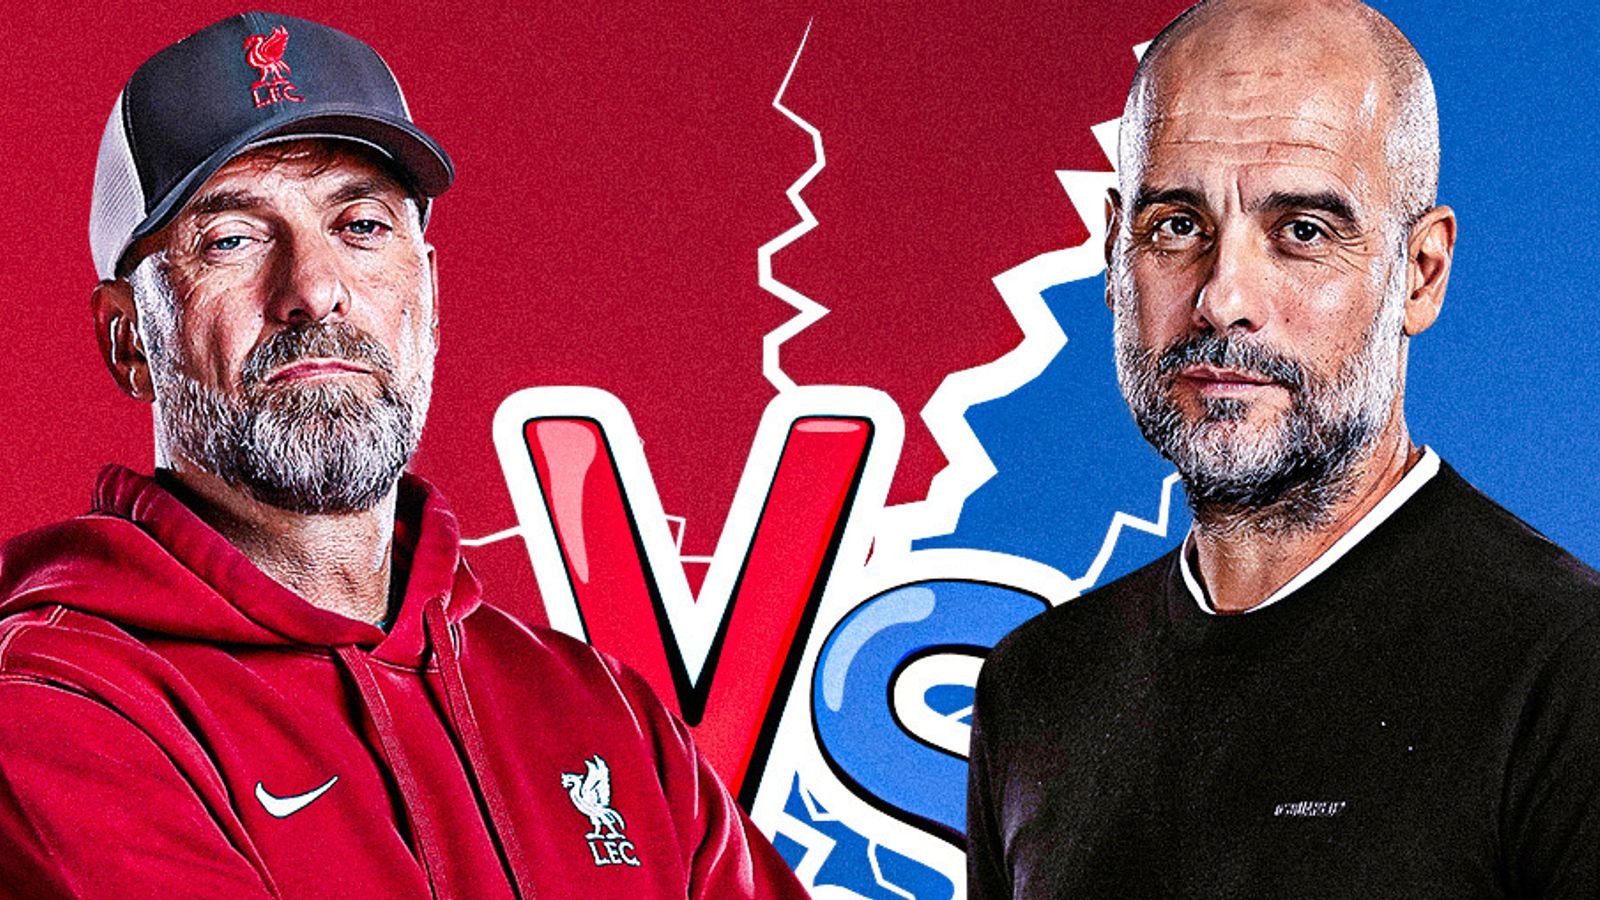 Liverpool vs Man City live on Sky this Sunday - 3.45pm KO!